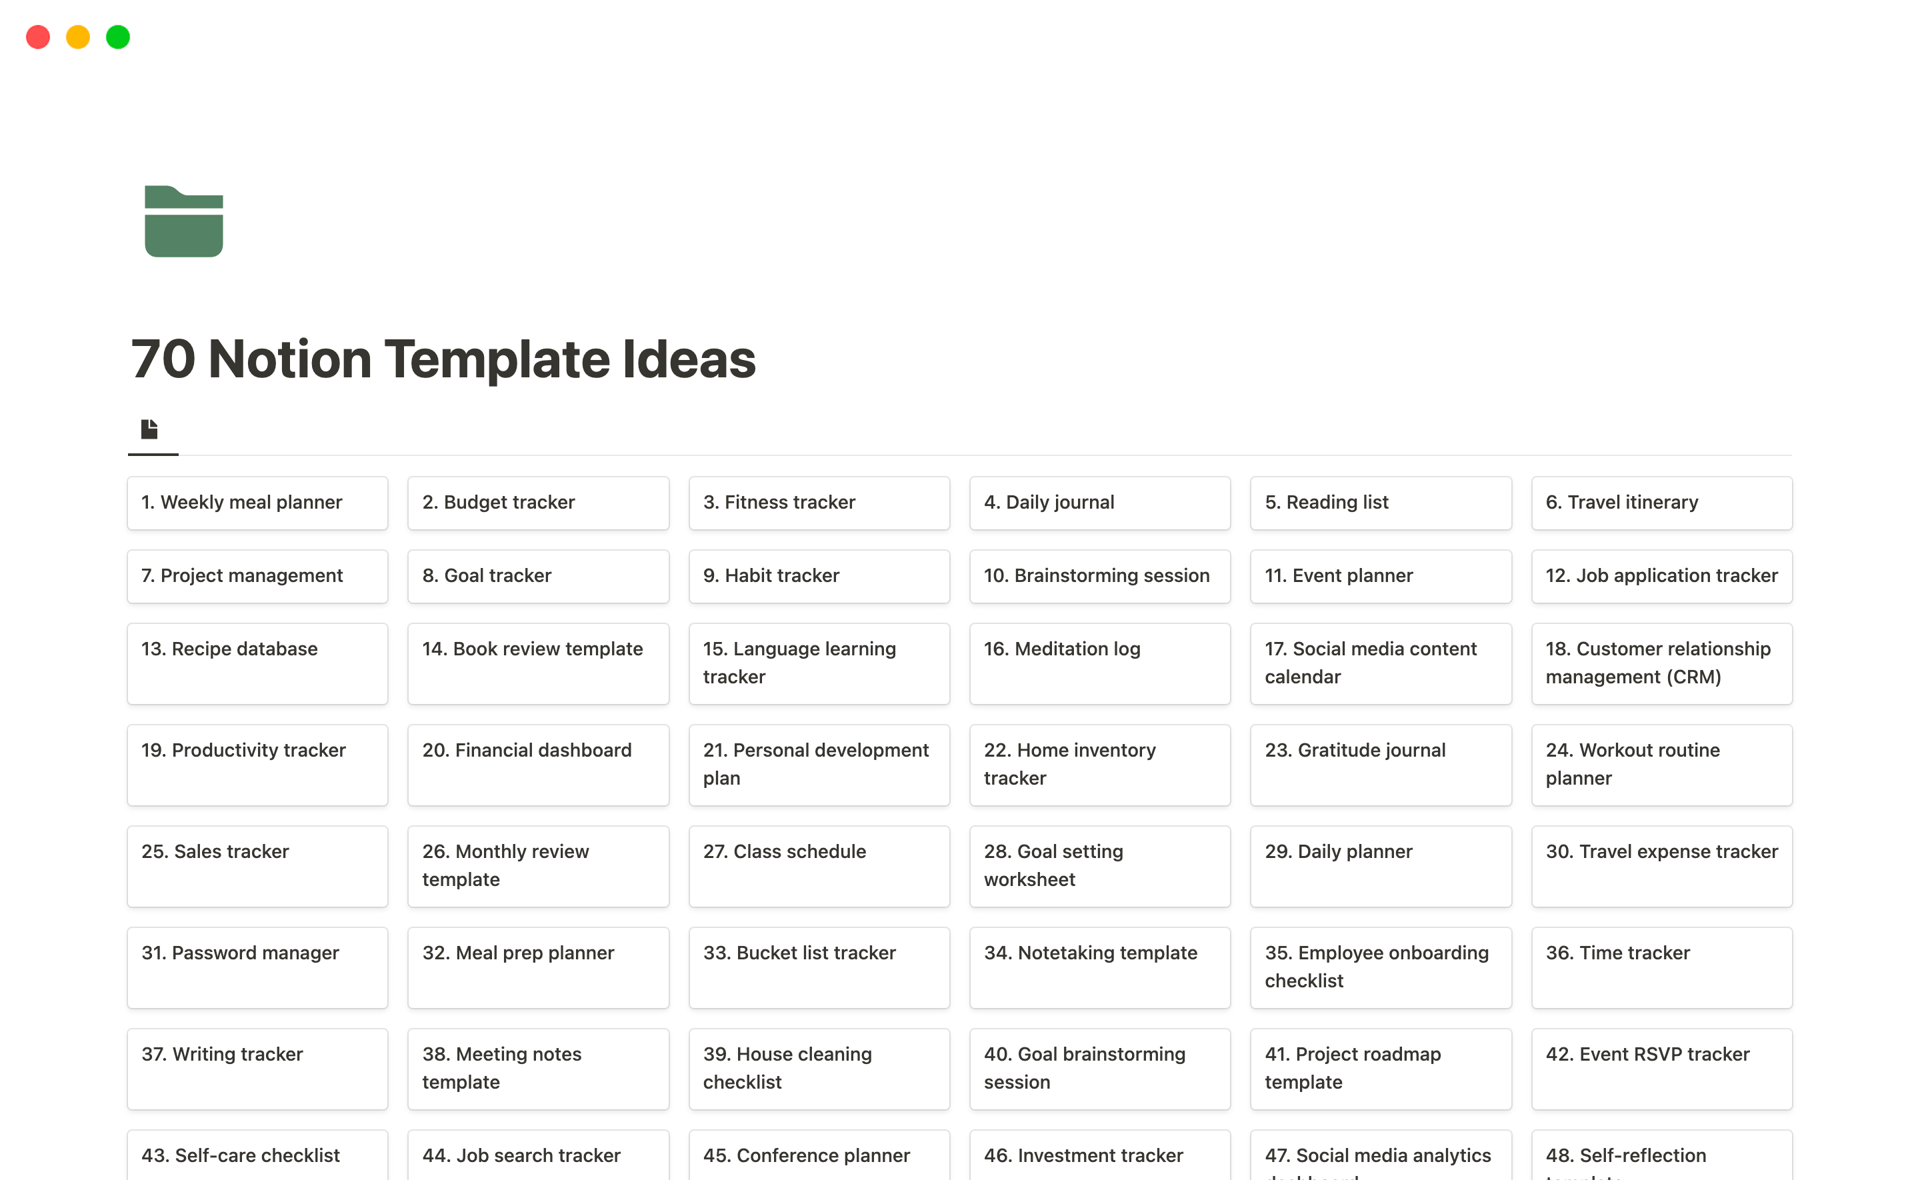 70 creative Notion Template Ideas 